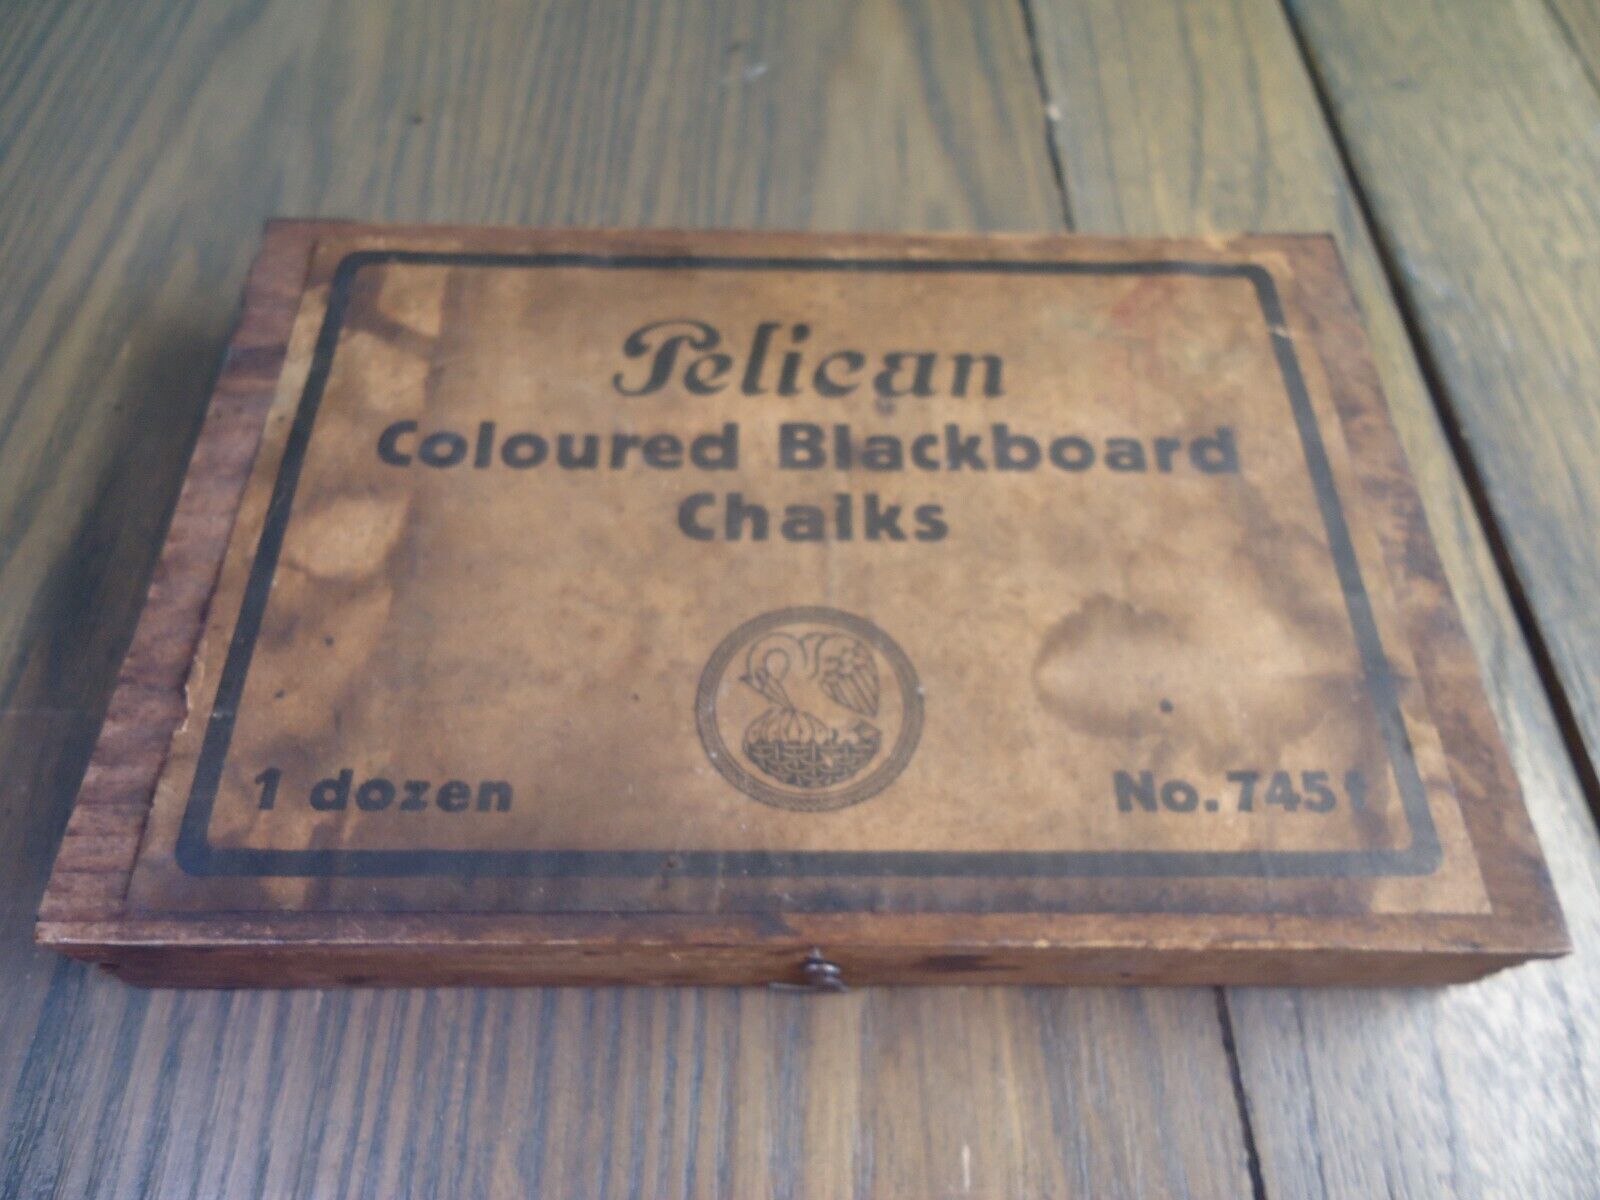 Vintage chalk Pelican Coloured blackboard chalks vintage school supplies collect